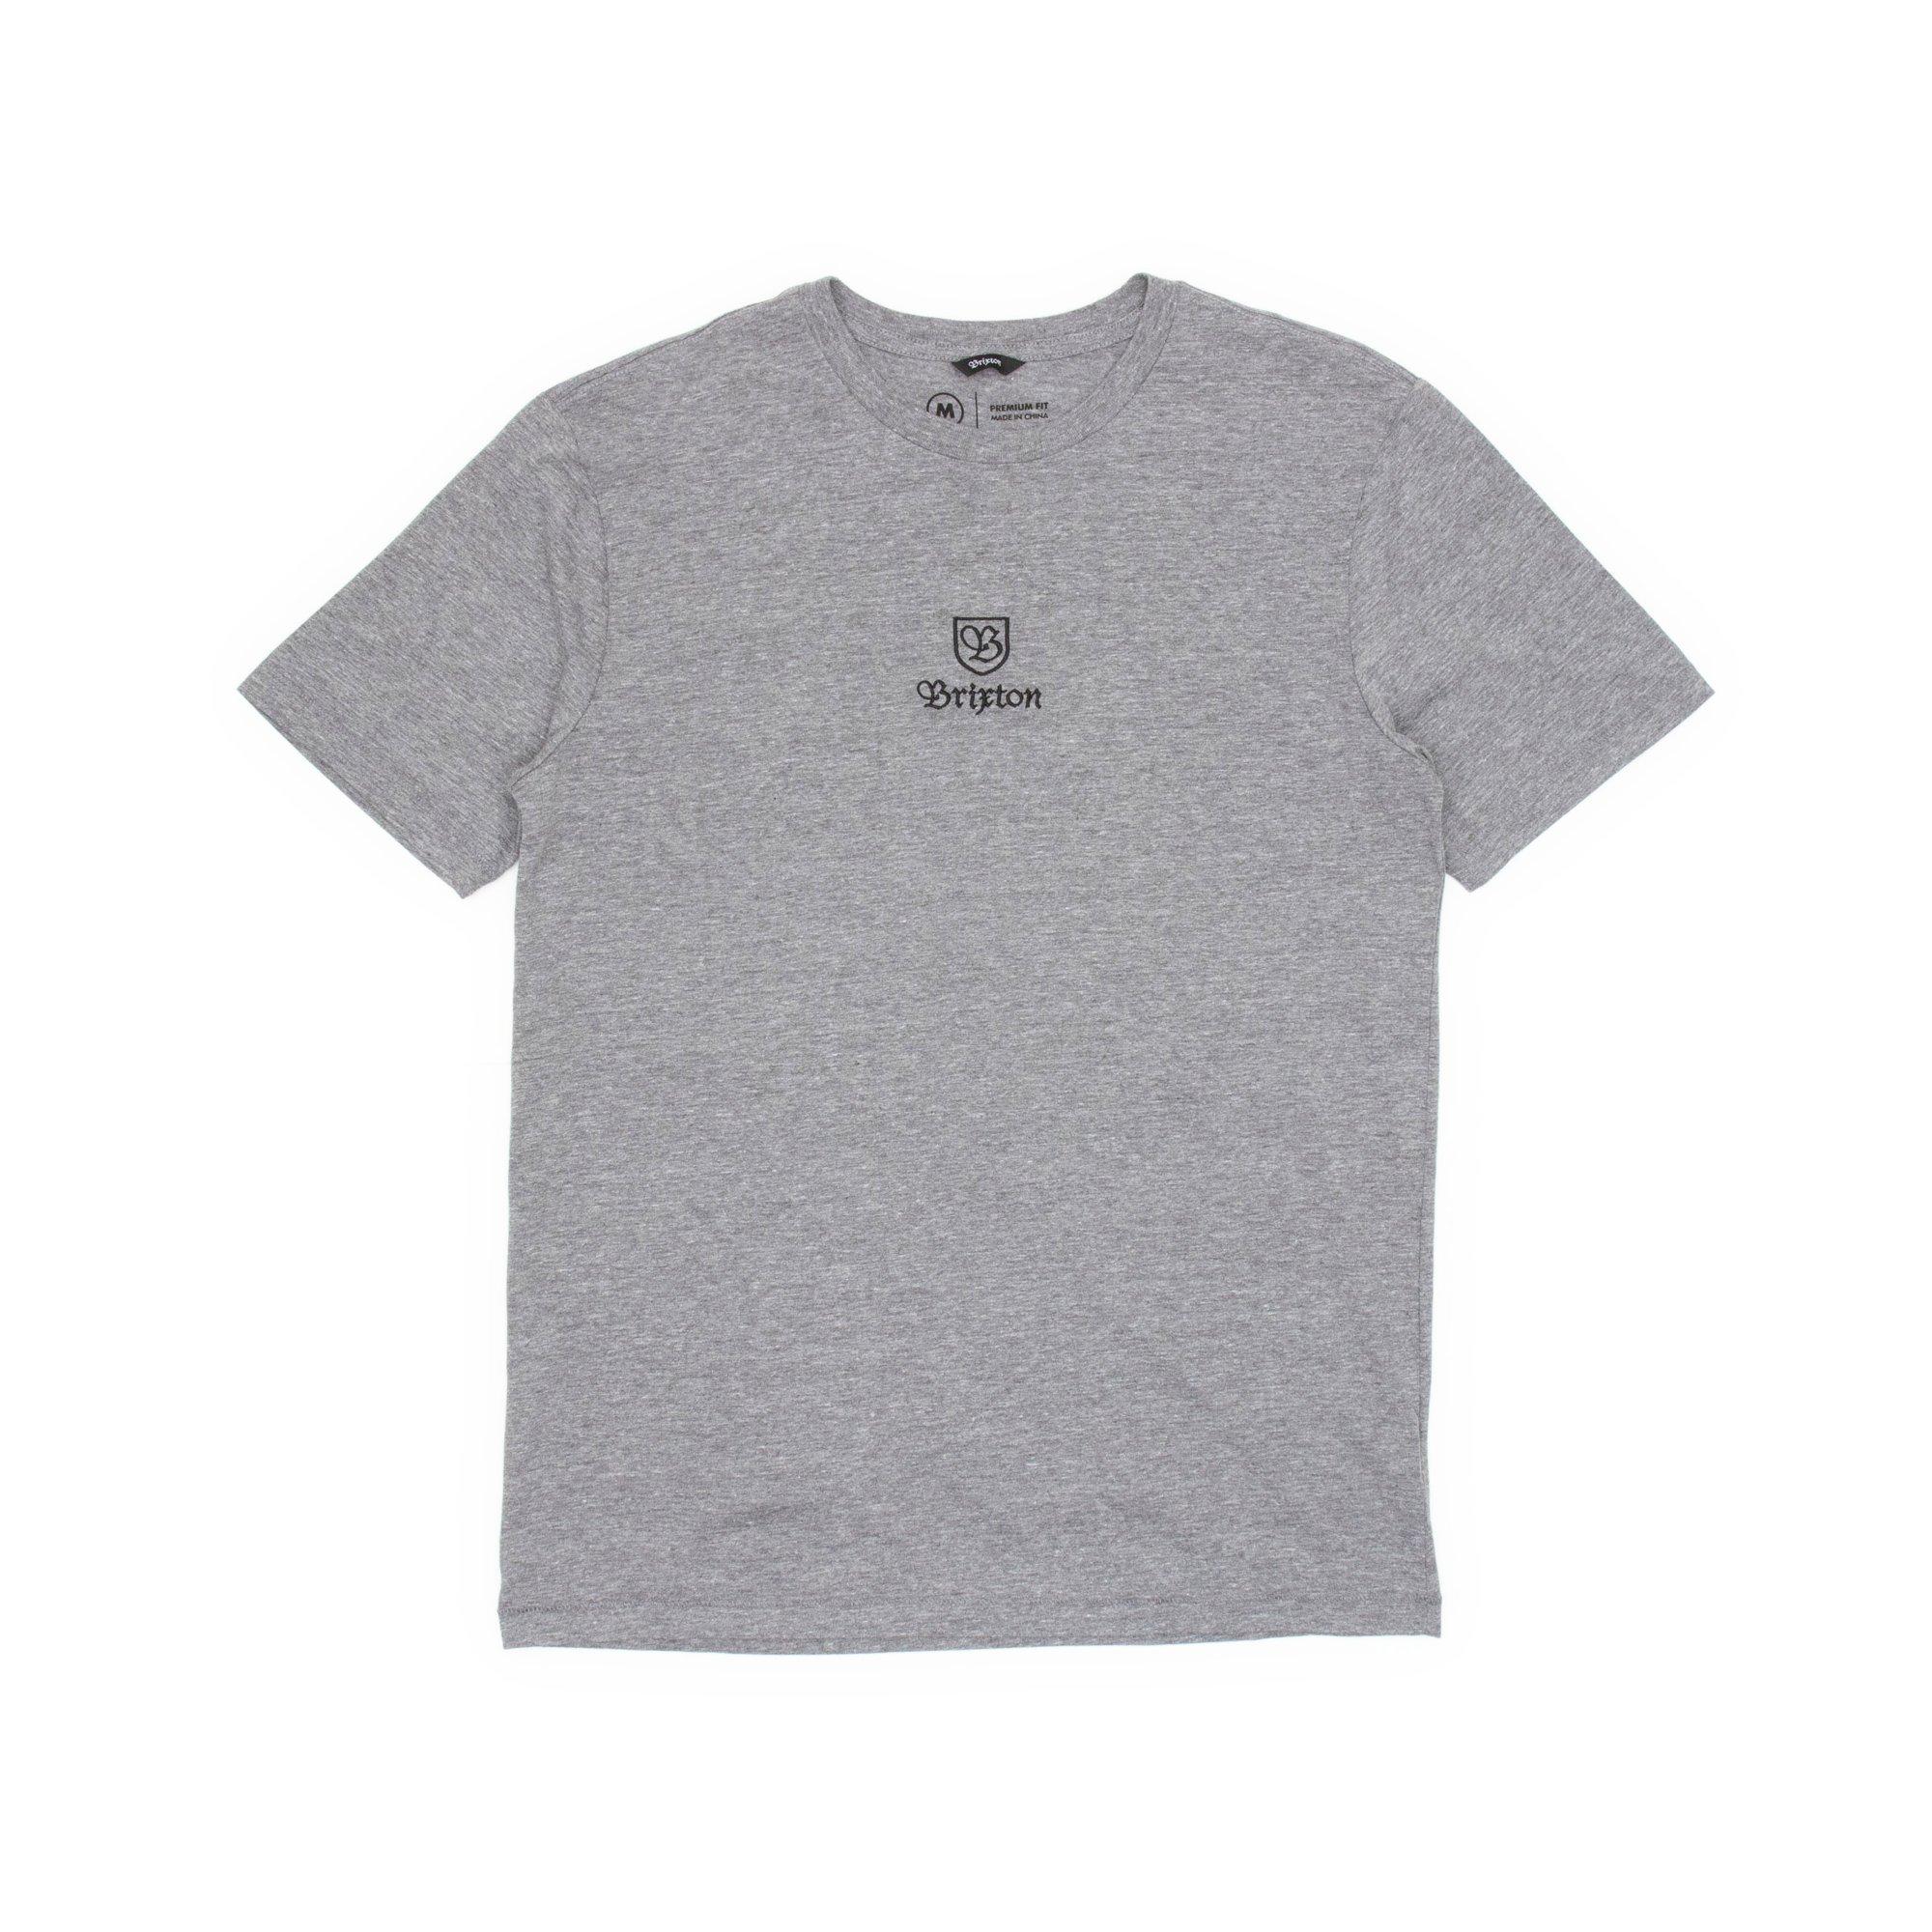 Brixton Cotton Main Label Premium T-shirt in Grey (Gray) for Men - Lyst